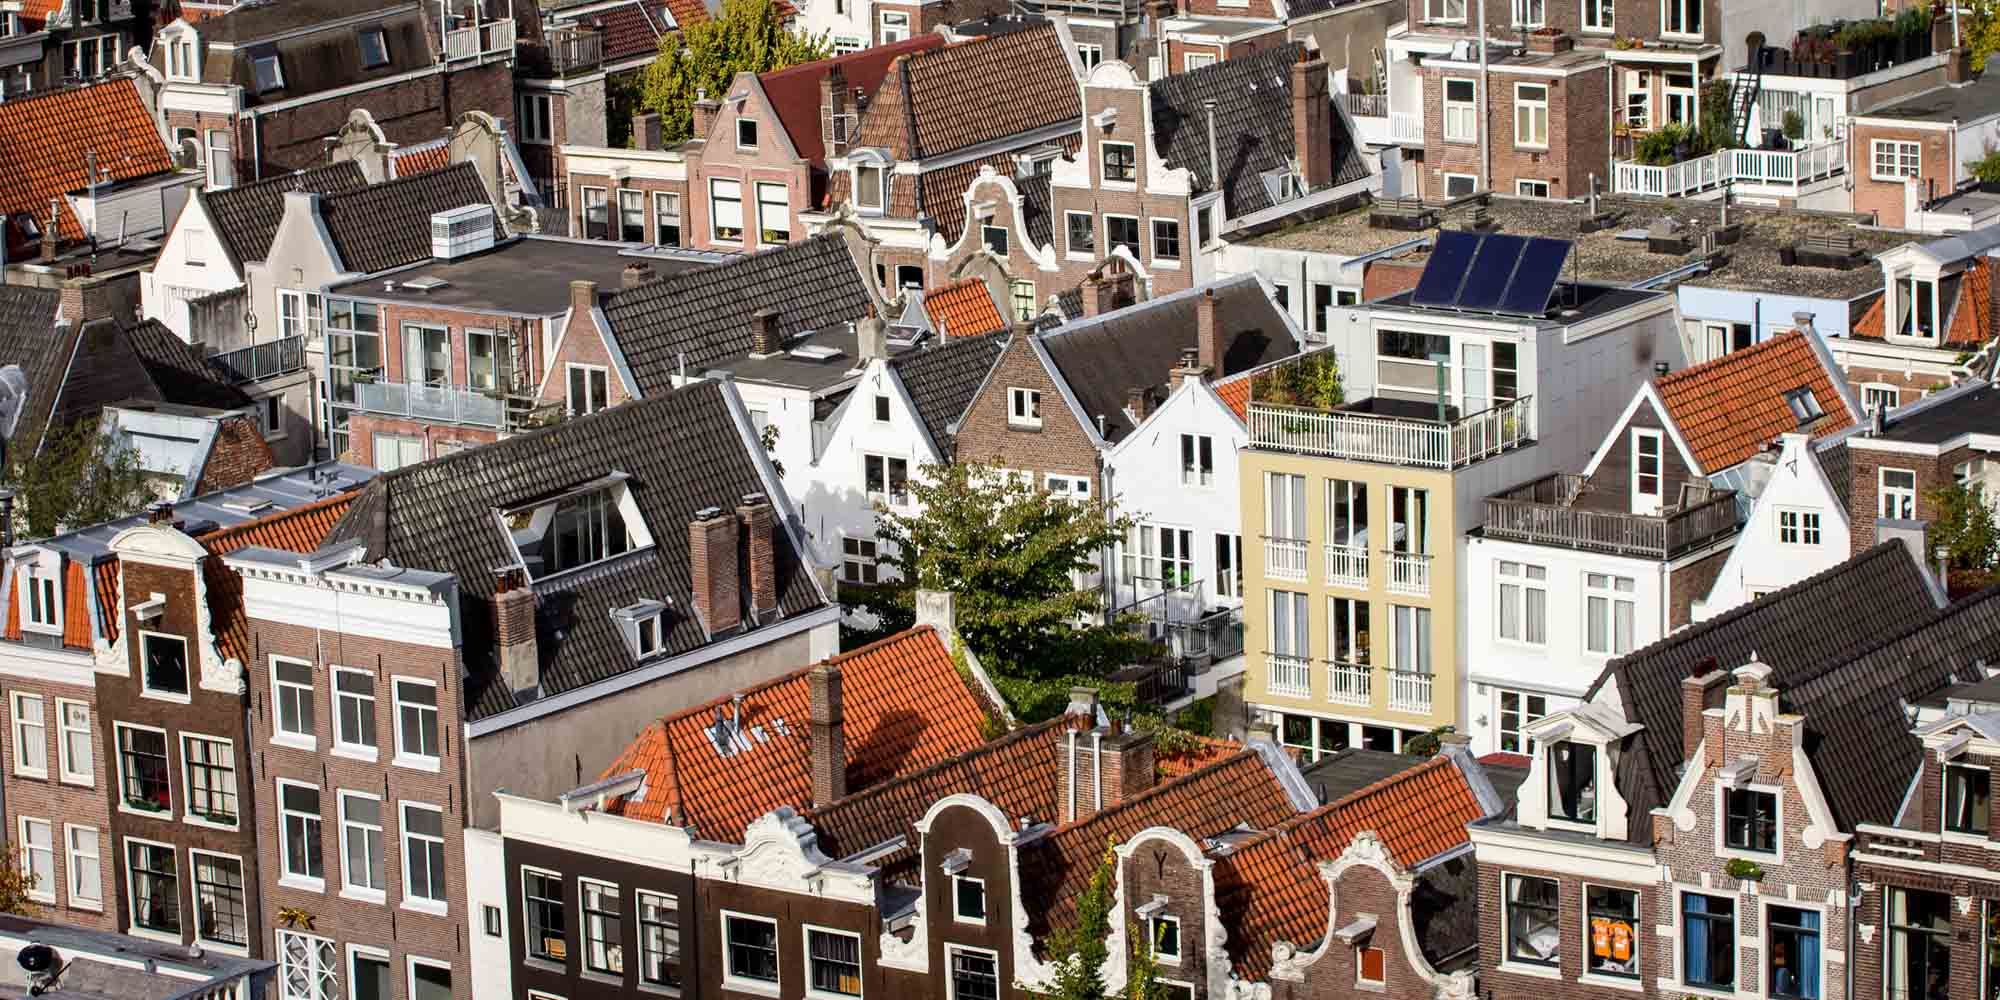 Ontslag nemen duisternis verwarring Dit is het goedkoopste huis van Nederland